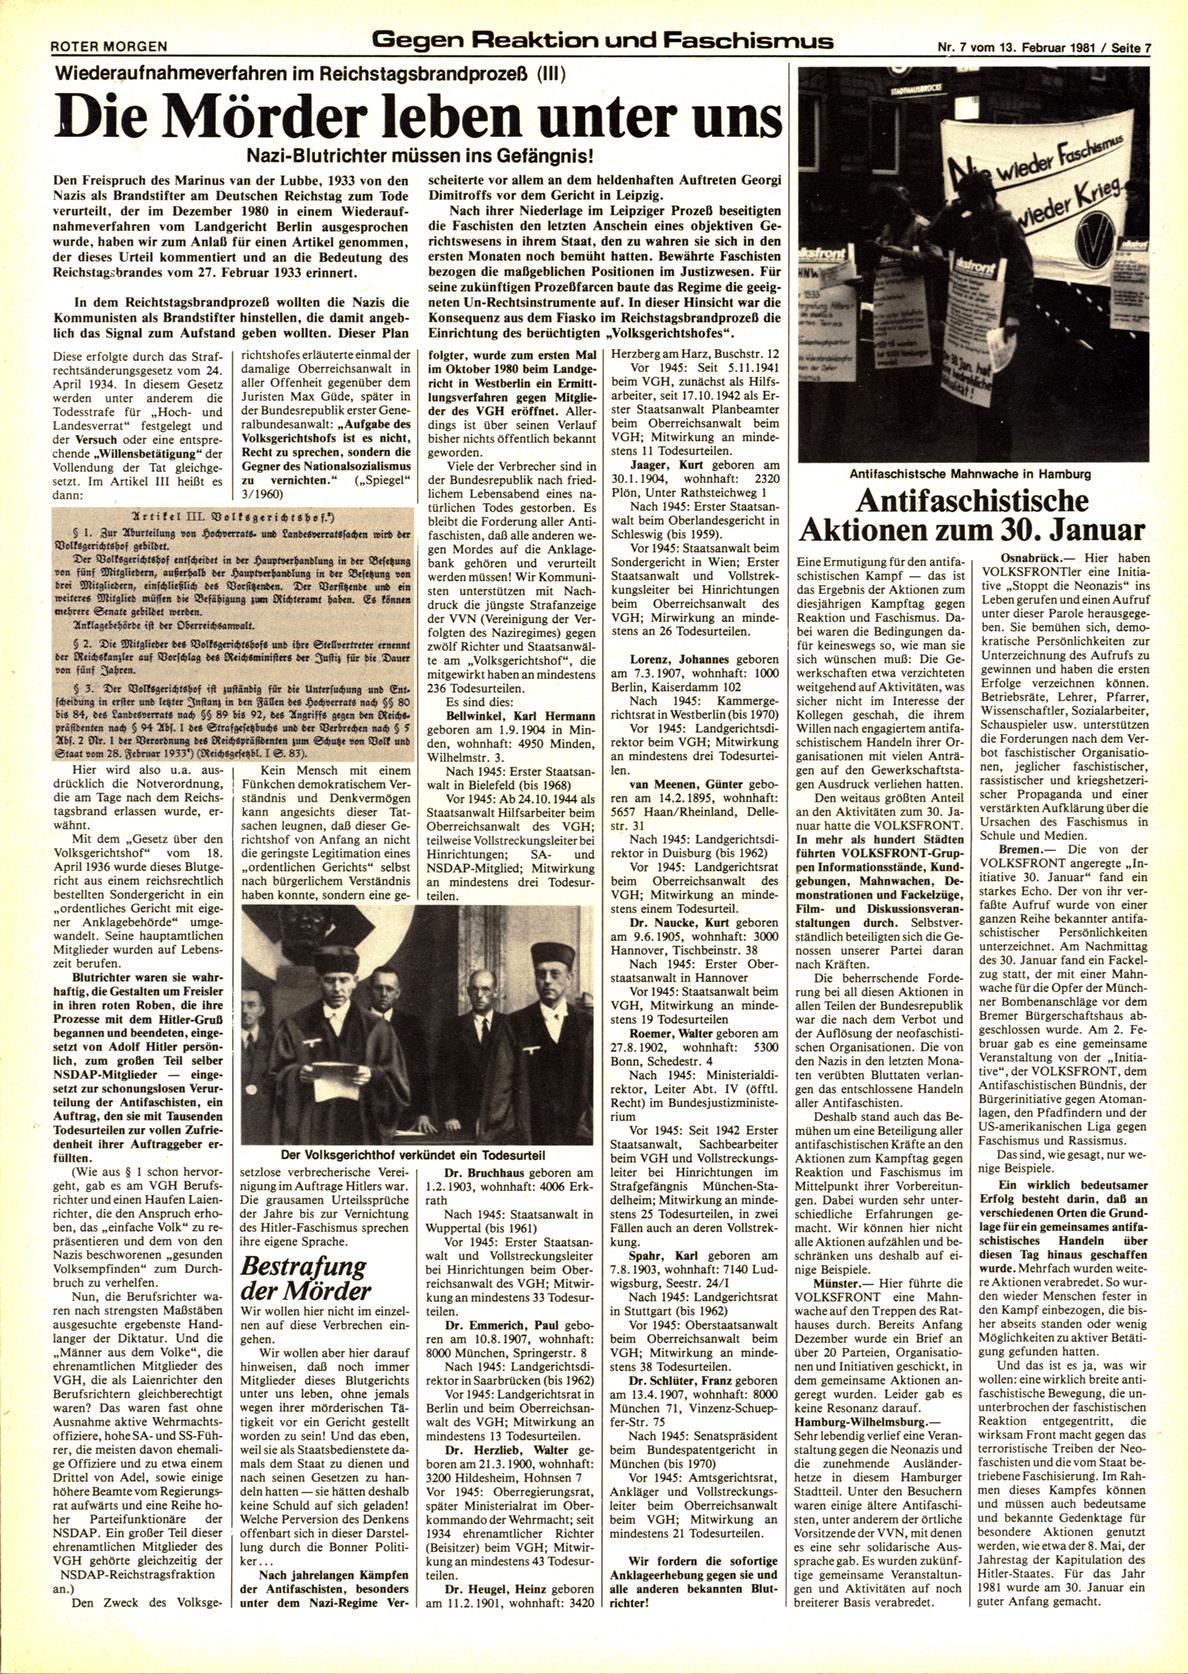 Roter Morgen, 15. Jg., 13. Februar 1981, Nr. 7, Seite 7